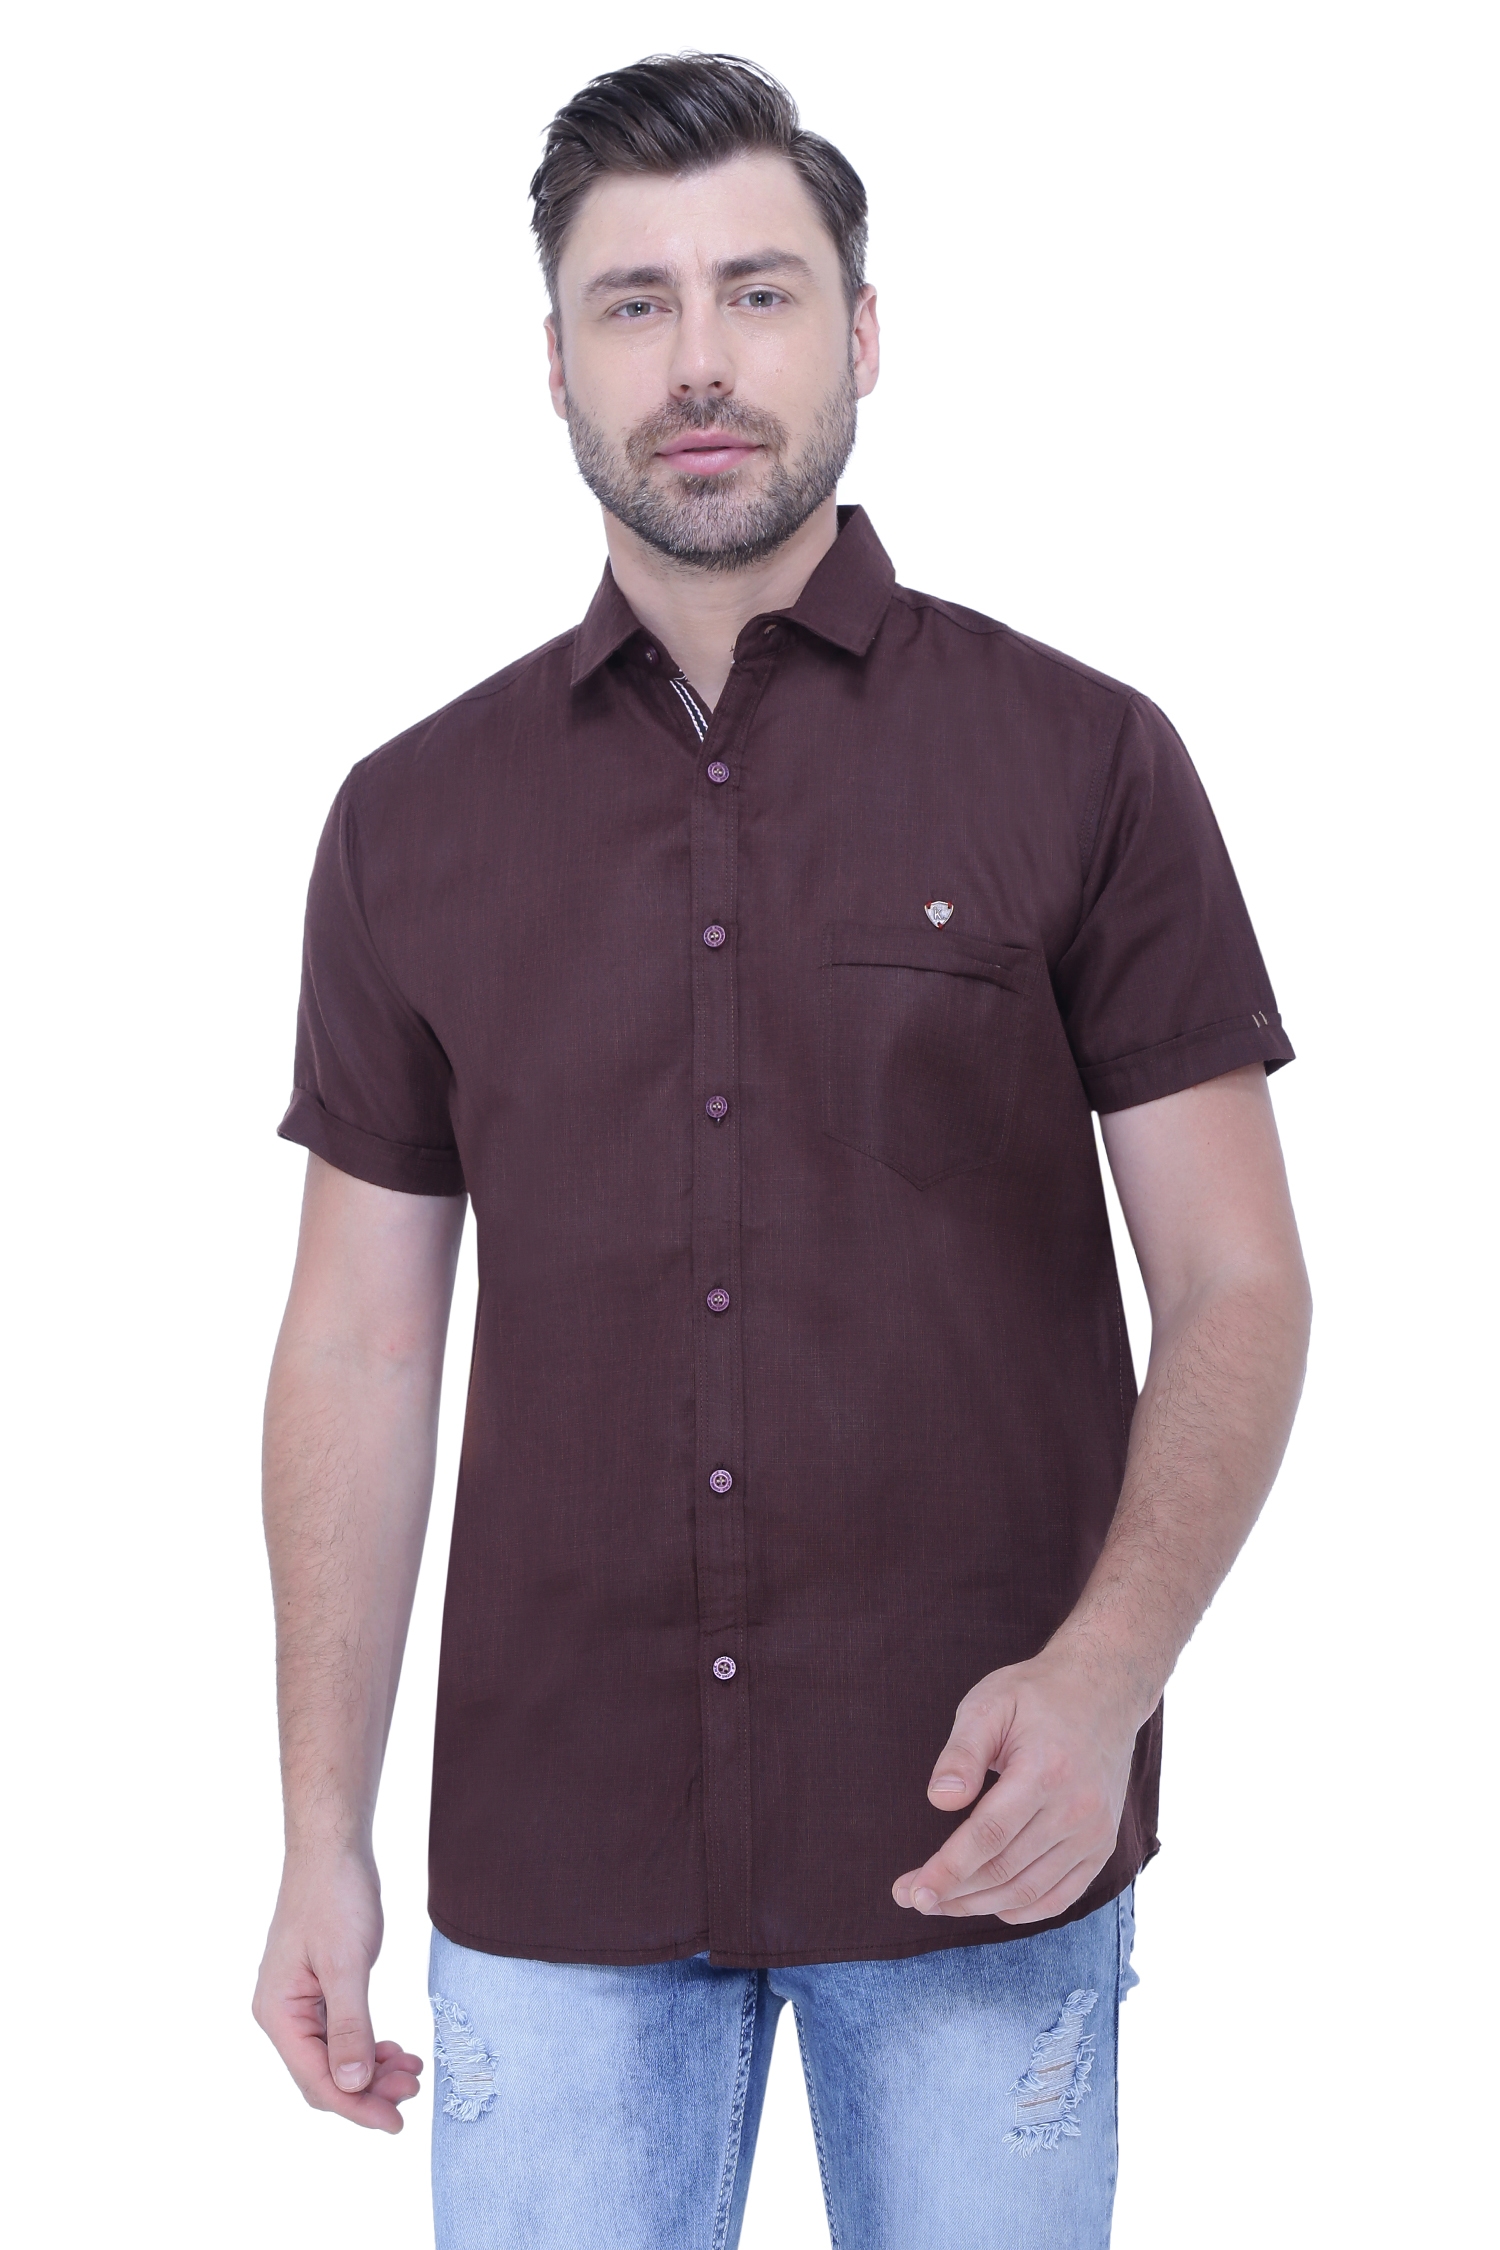 Kuons Avenue | Kuons Avenue Men's Linen Blend Half Sleeves Casual Shirt-KACLHS1240 0